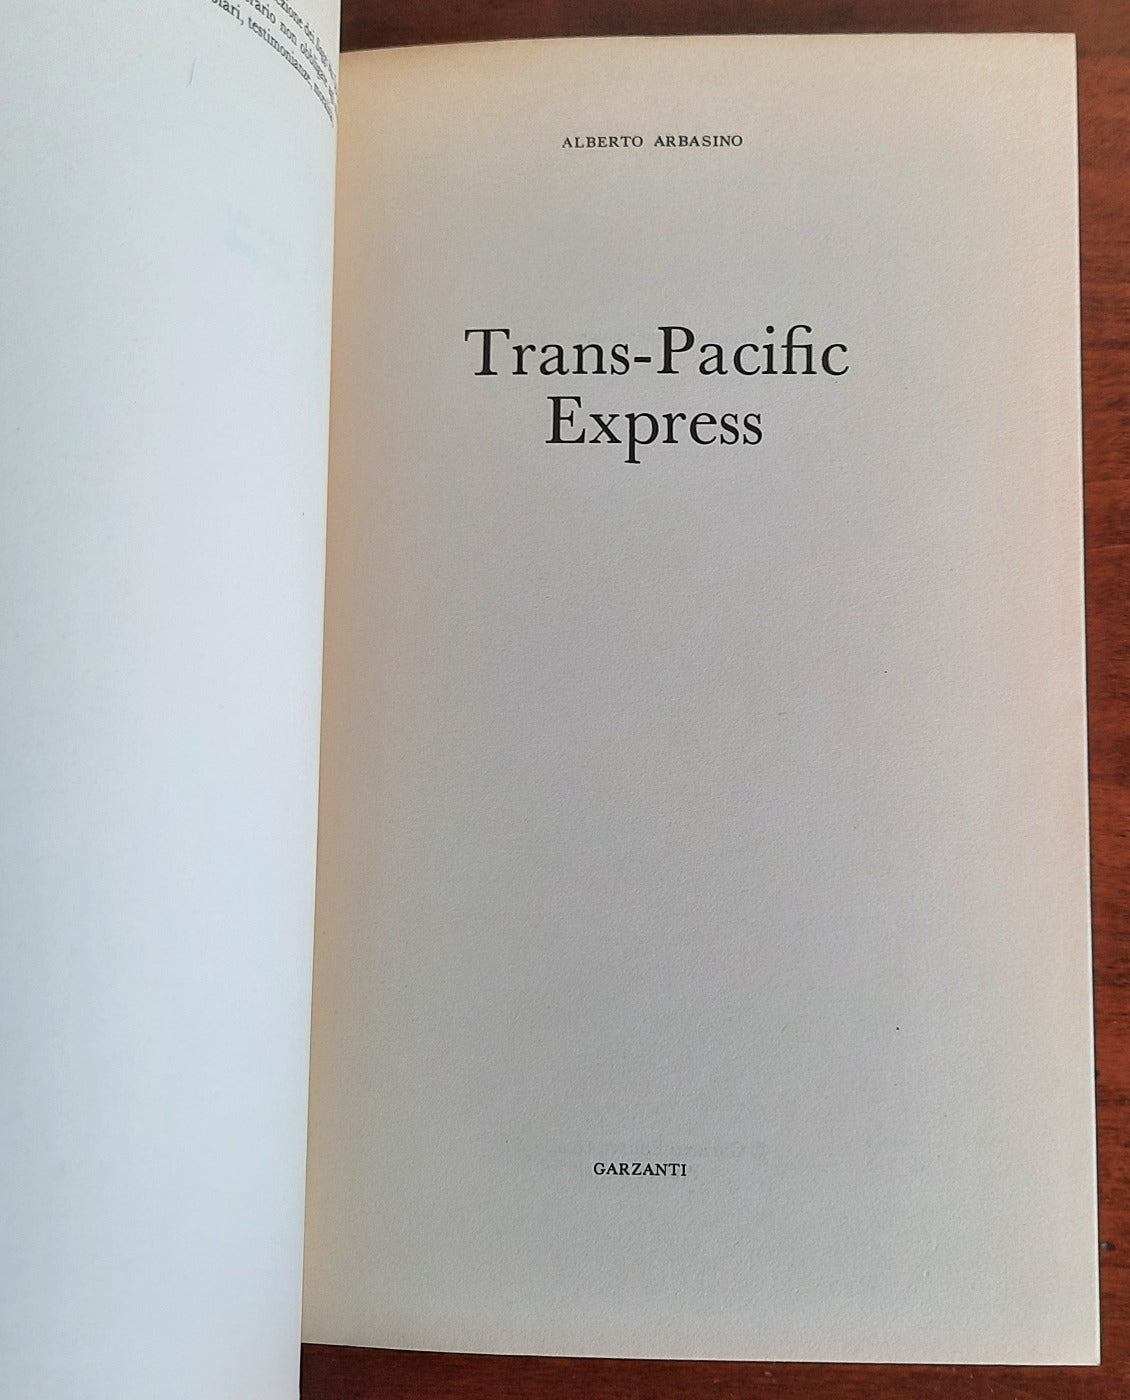 Trans-Pacific Express. Dieci viaggi in dieci paesi d’Oriente